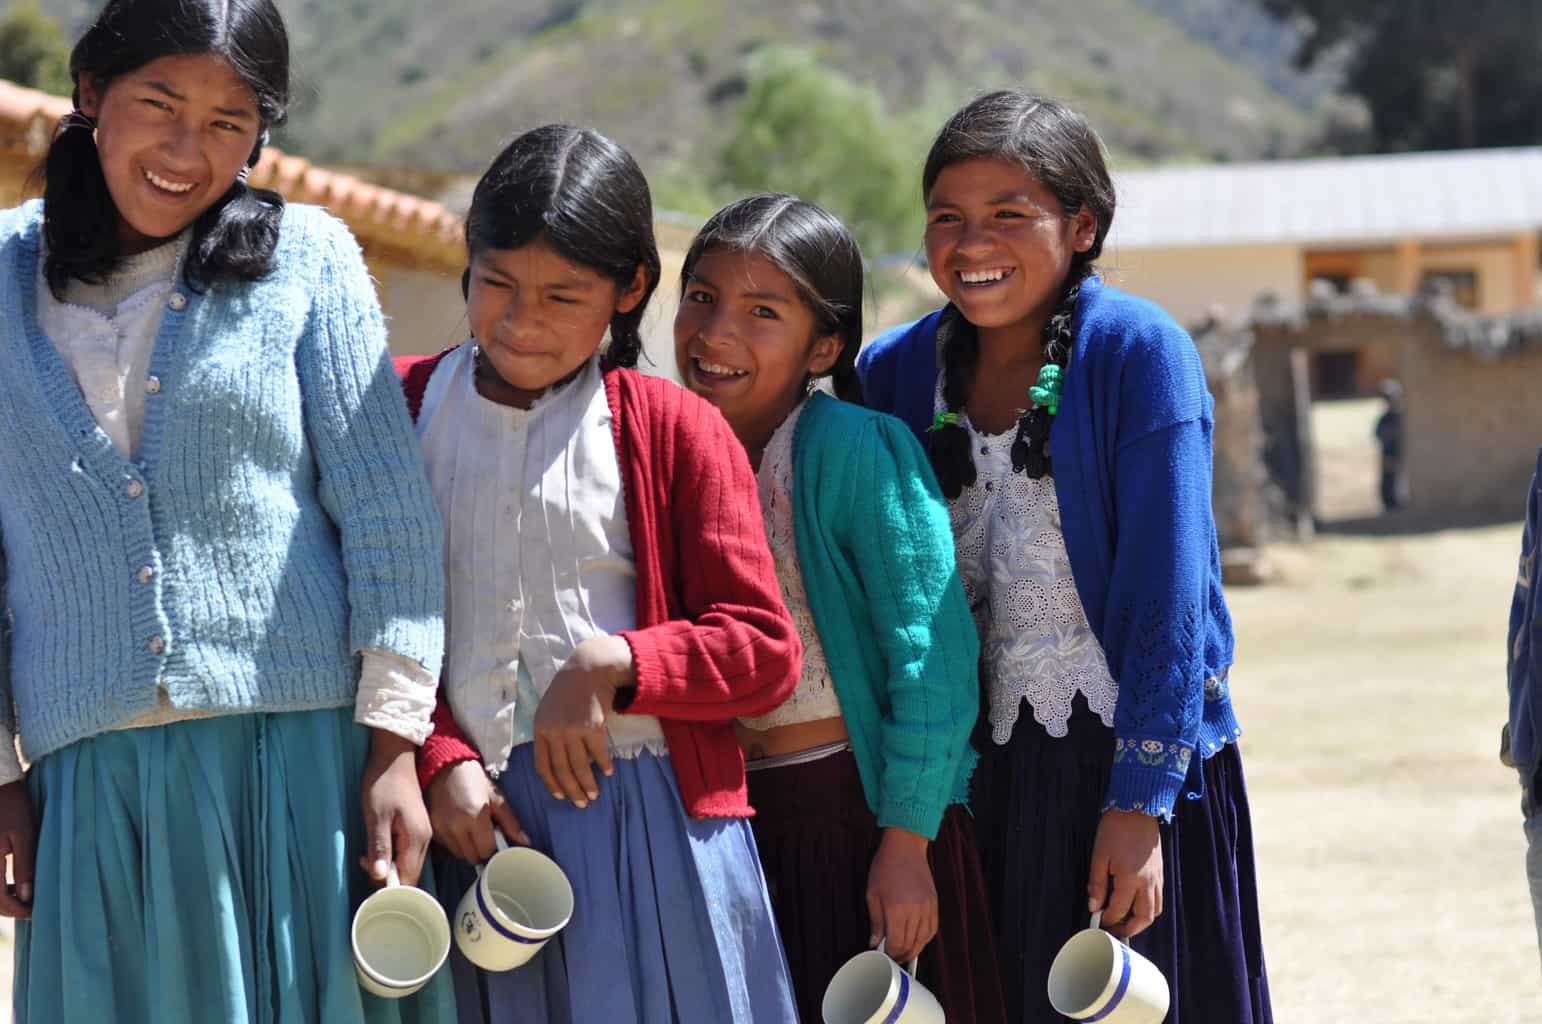 4 young smiling Bolivian girls